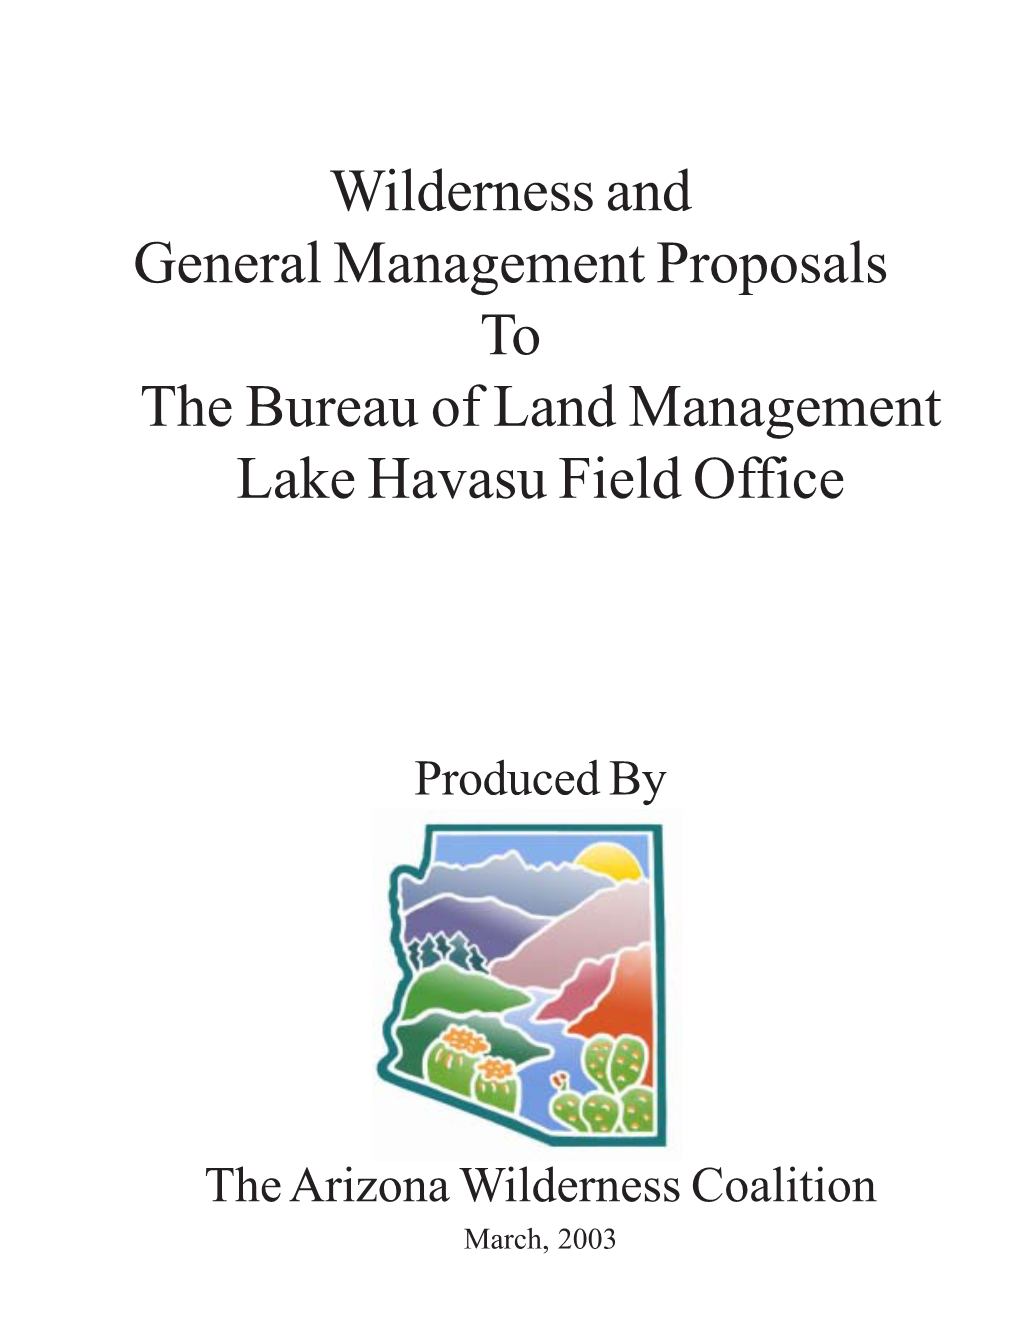 Lake Havasu Field Office-BLM Wilderness Proposal